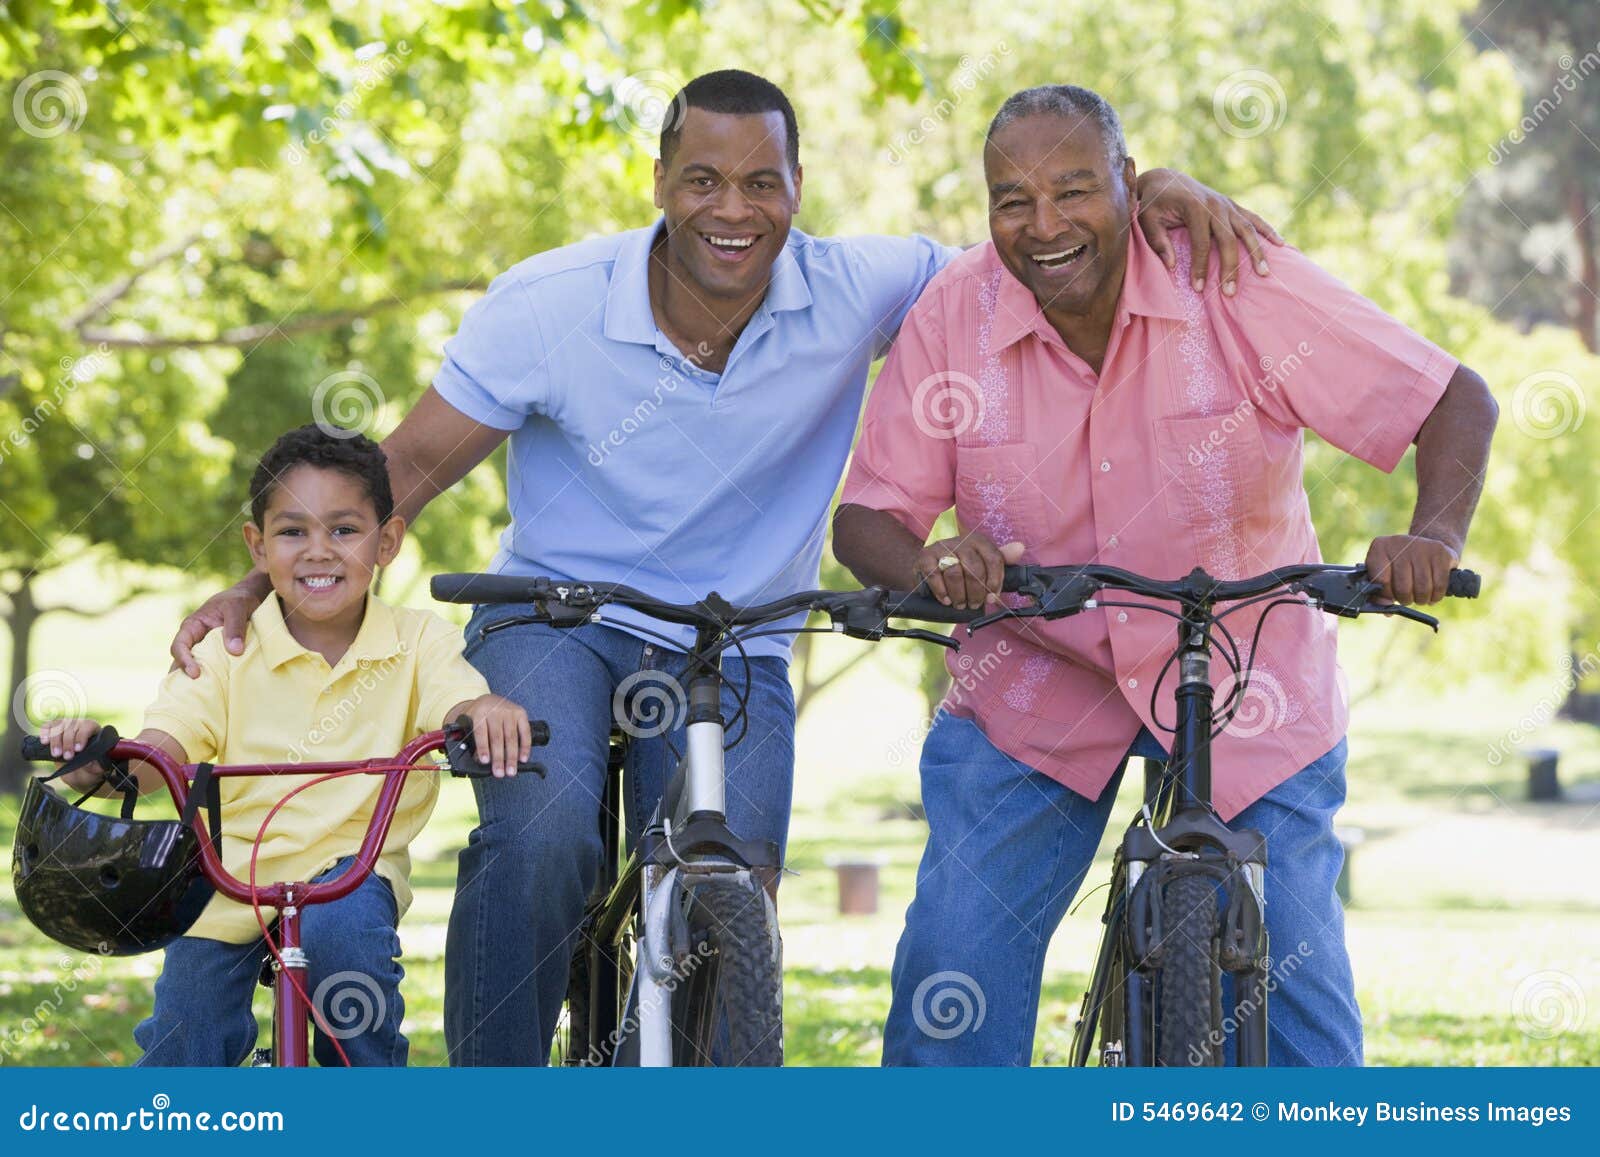 grandfather grandson and son bike riding